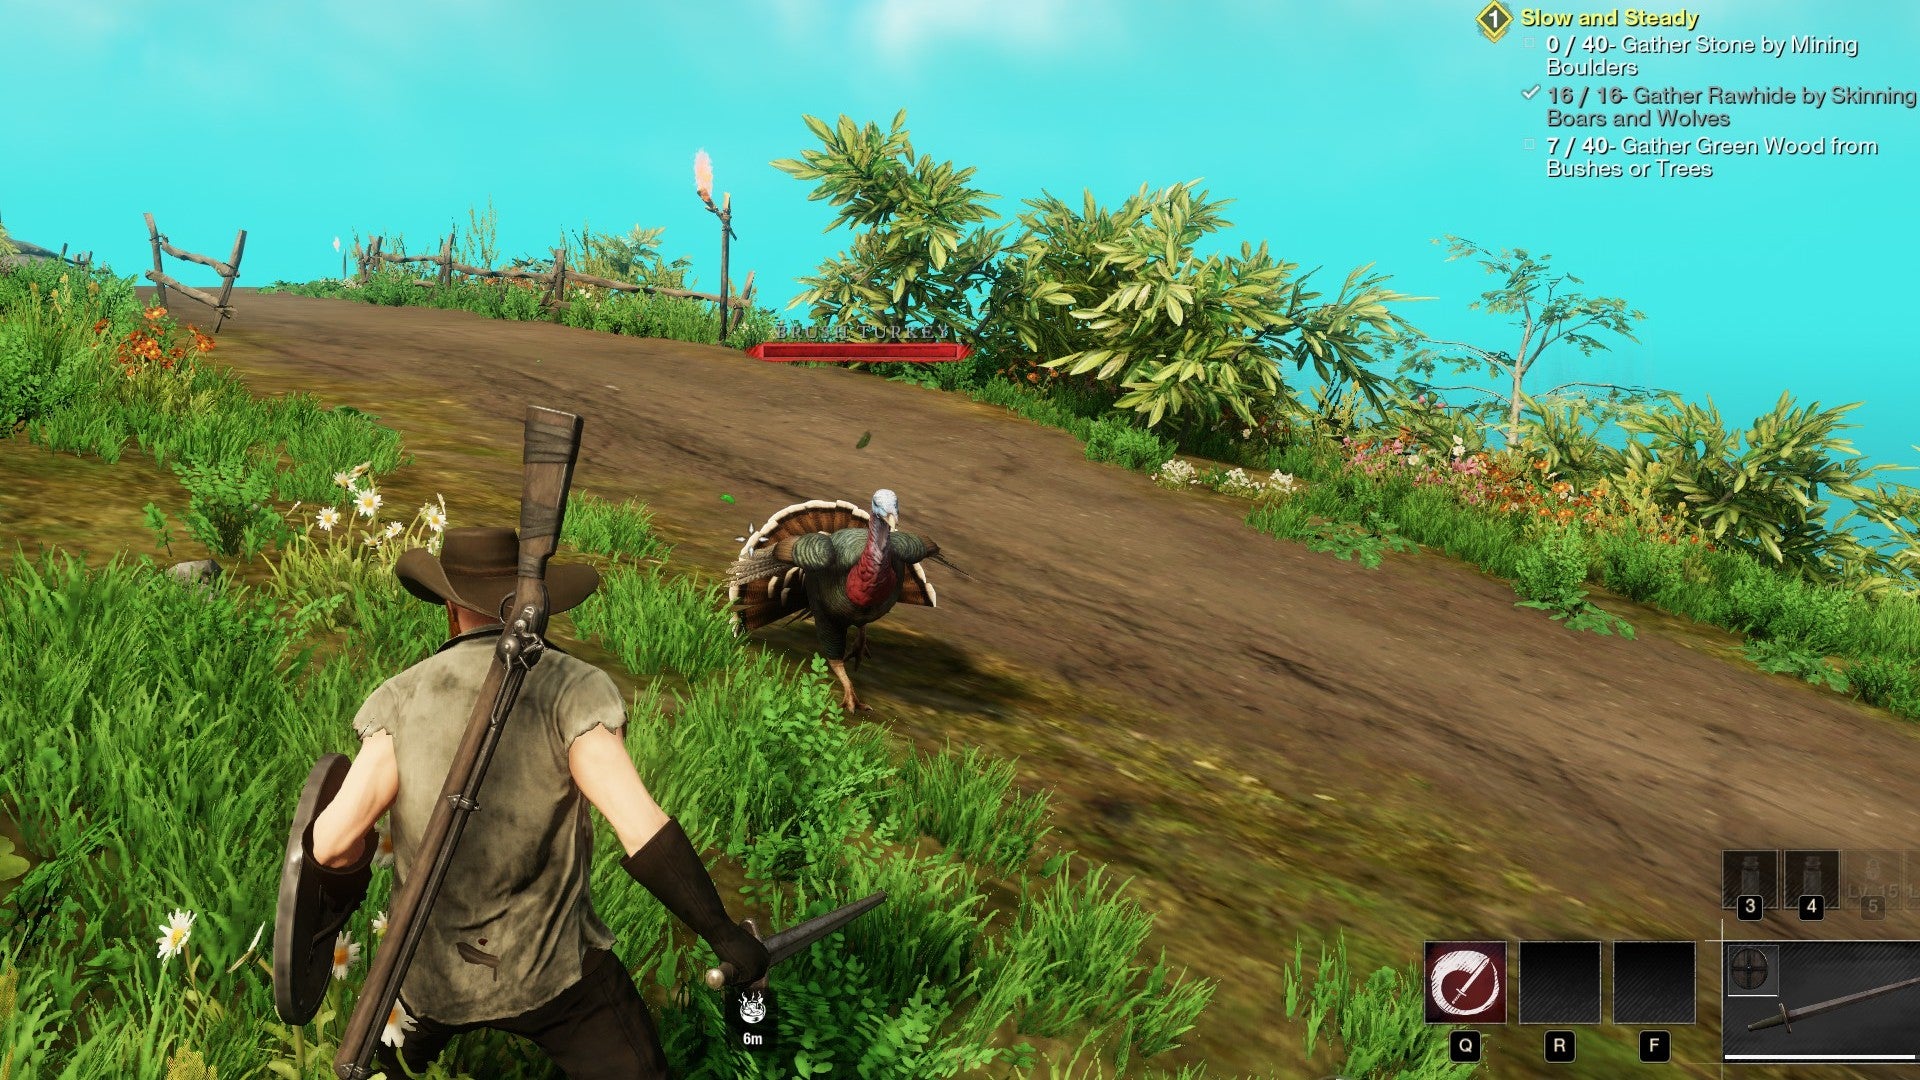 New World Turkey running towards player character on a dirt path near the First Light settlement